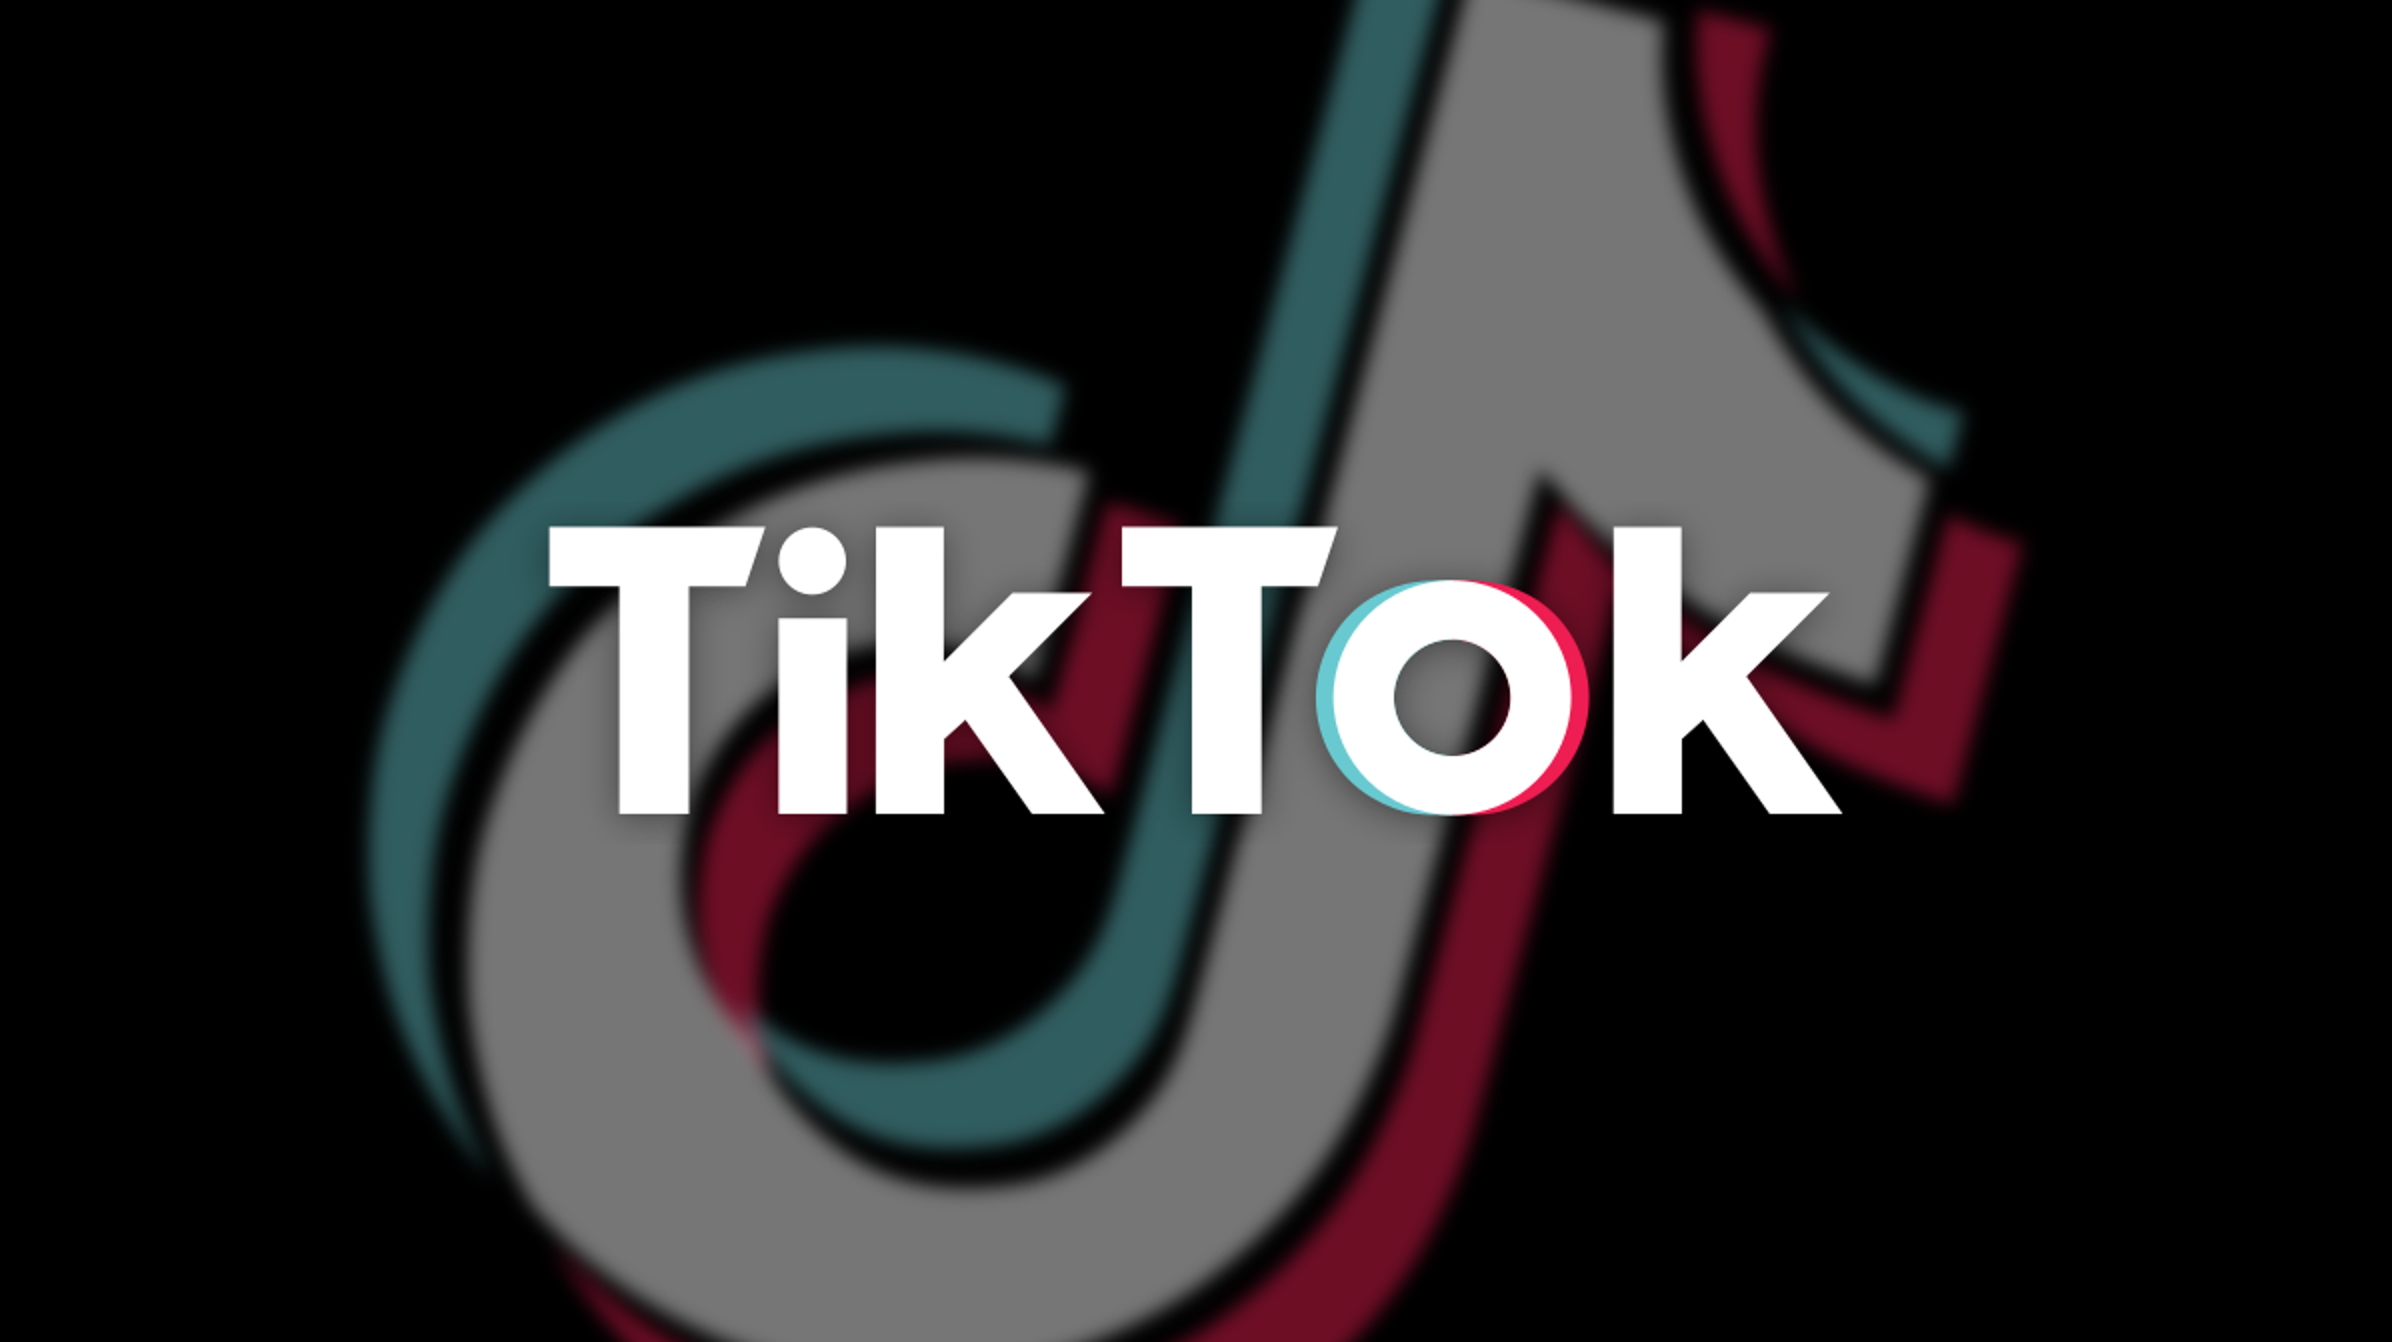 How to Change Your TikTok Name